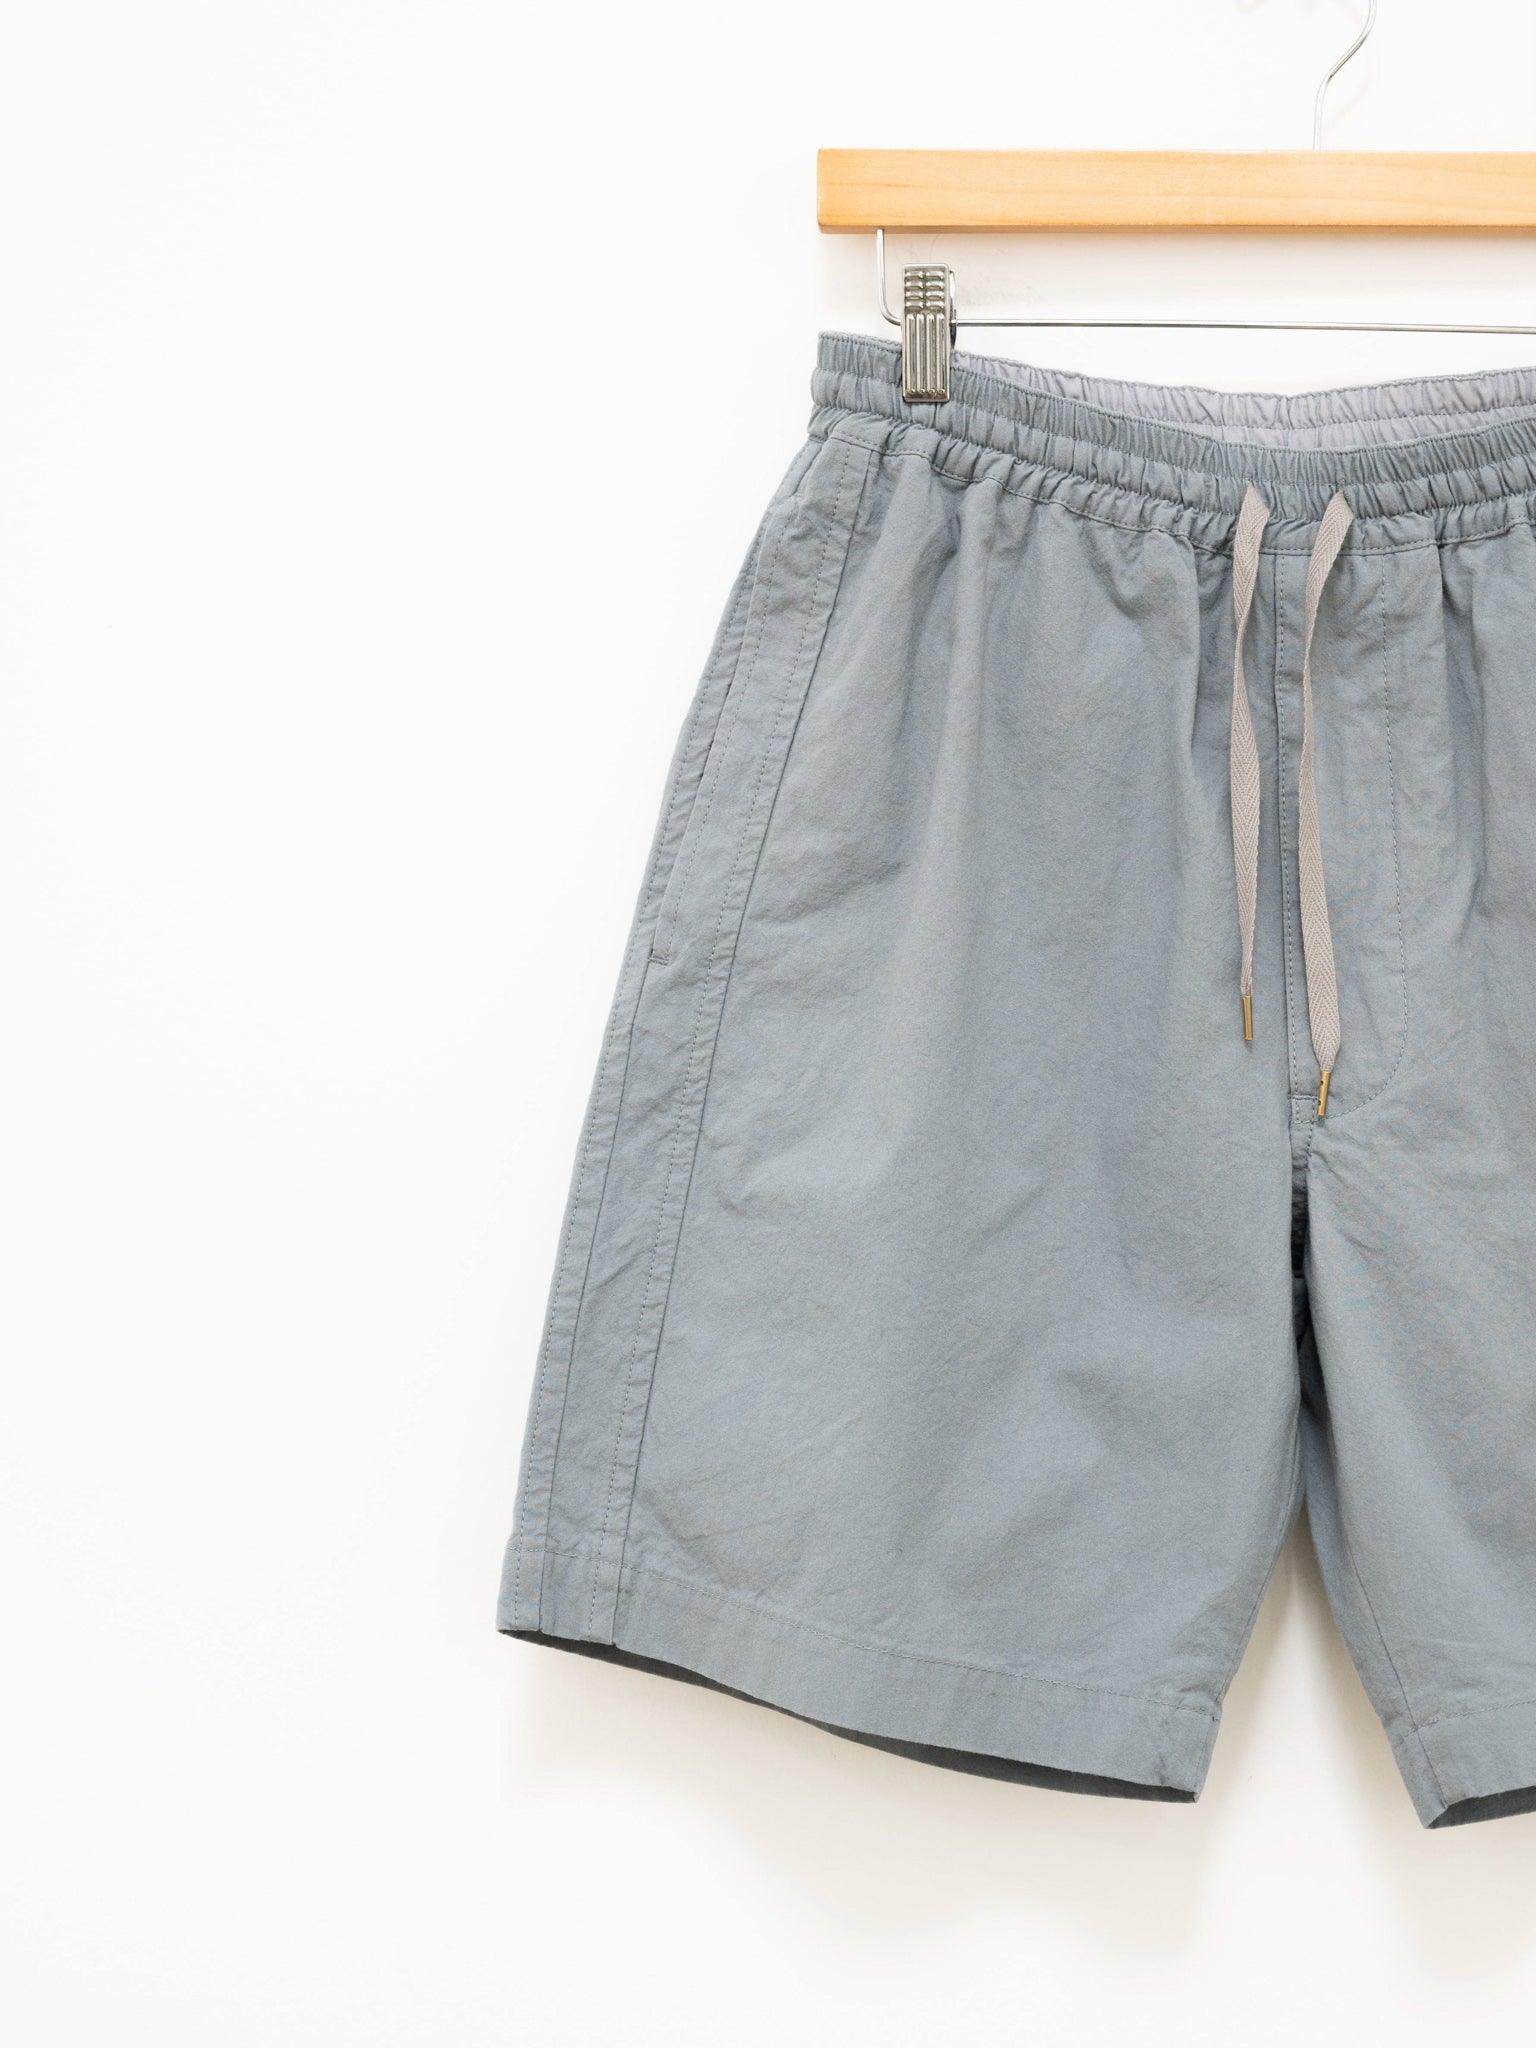 Namu Shop - Fujito Line Easy Shorts - Blue Gray